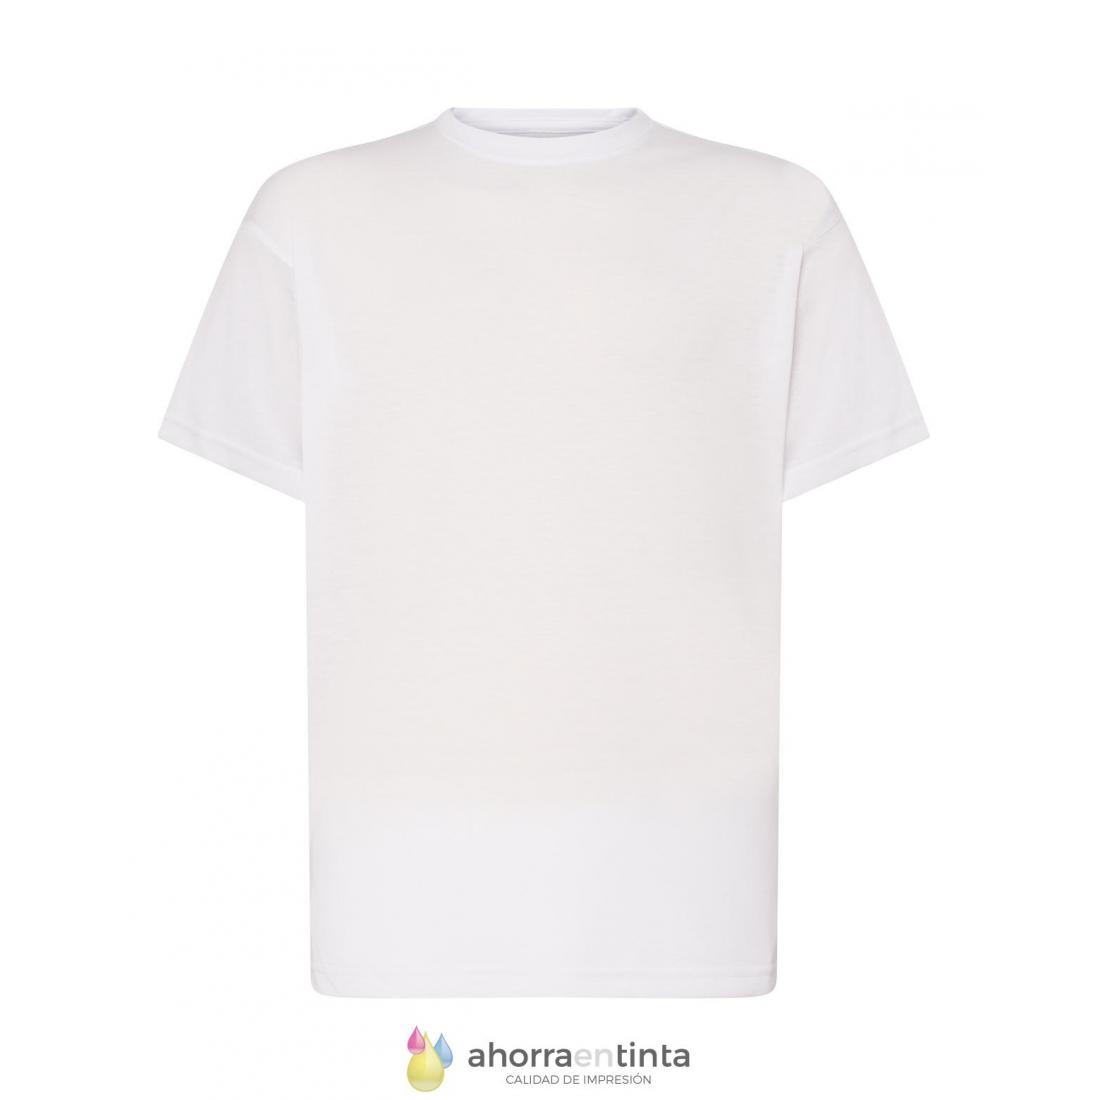 Camiseta algodón blanca - Hombre - PV2020